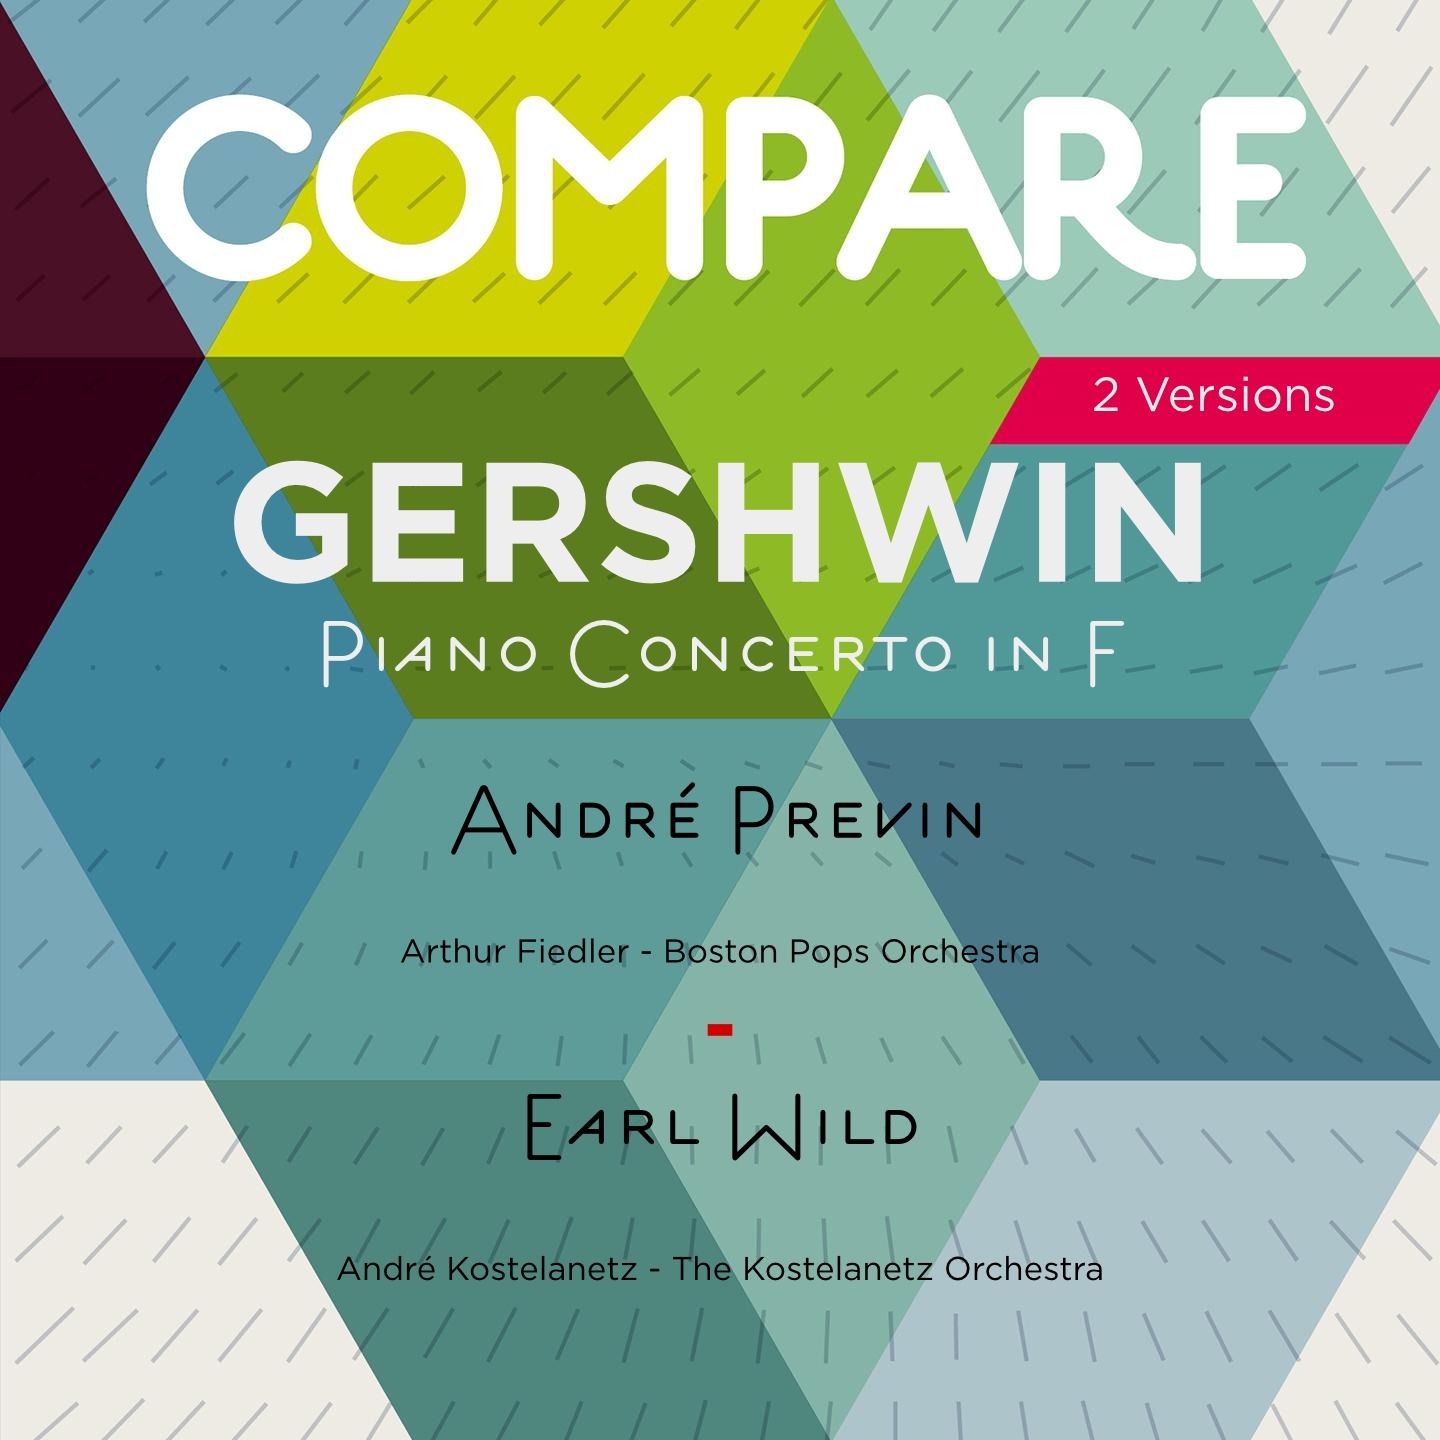 Gershwin: Piano Concerto in F Major, Andre Previn vs. Earl Wild